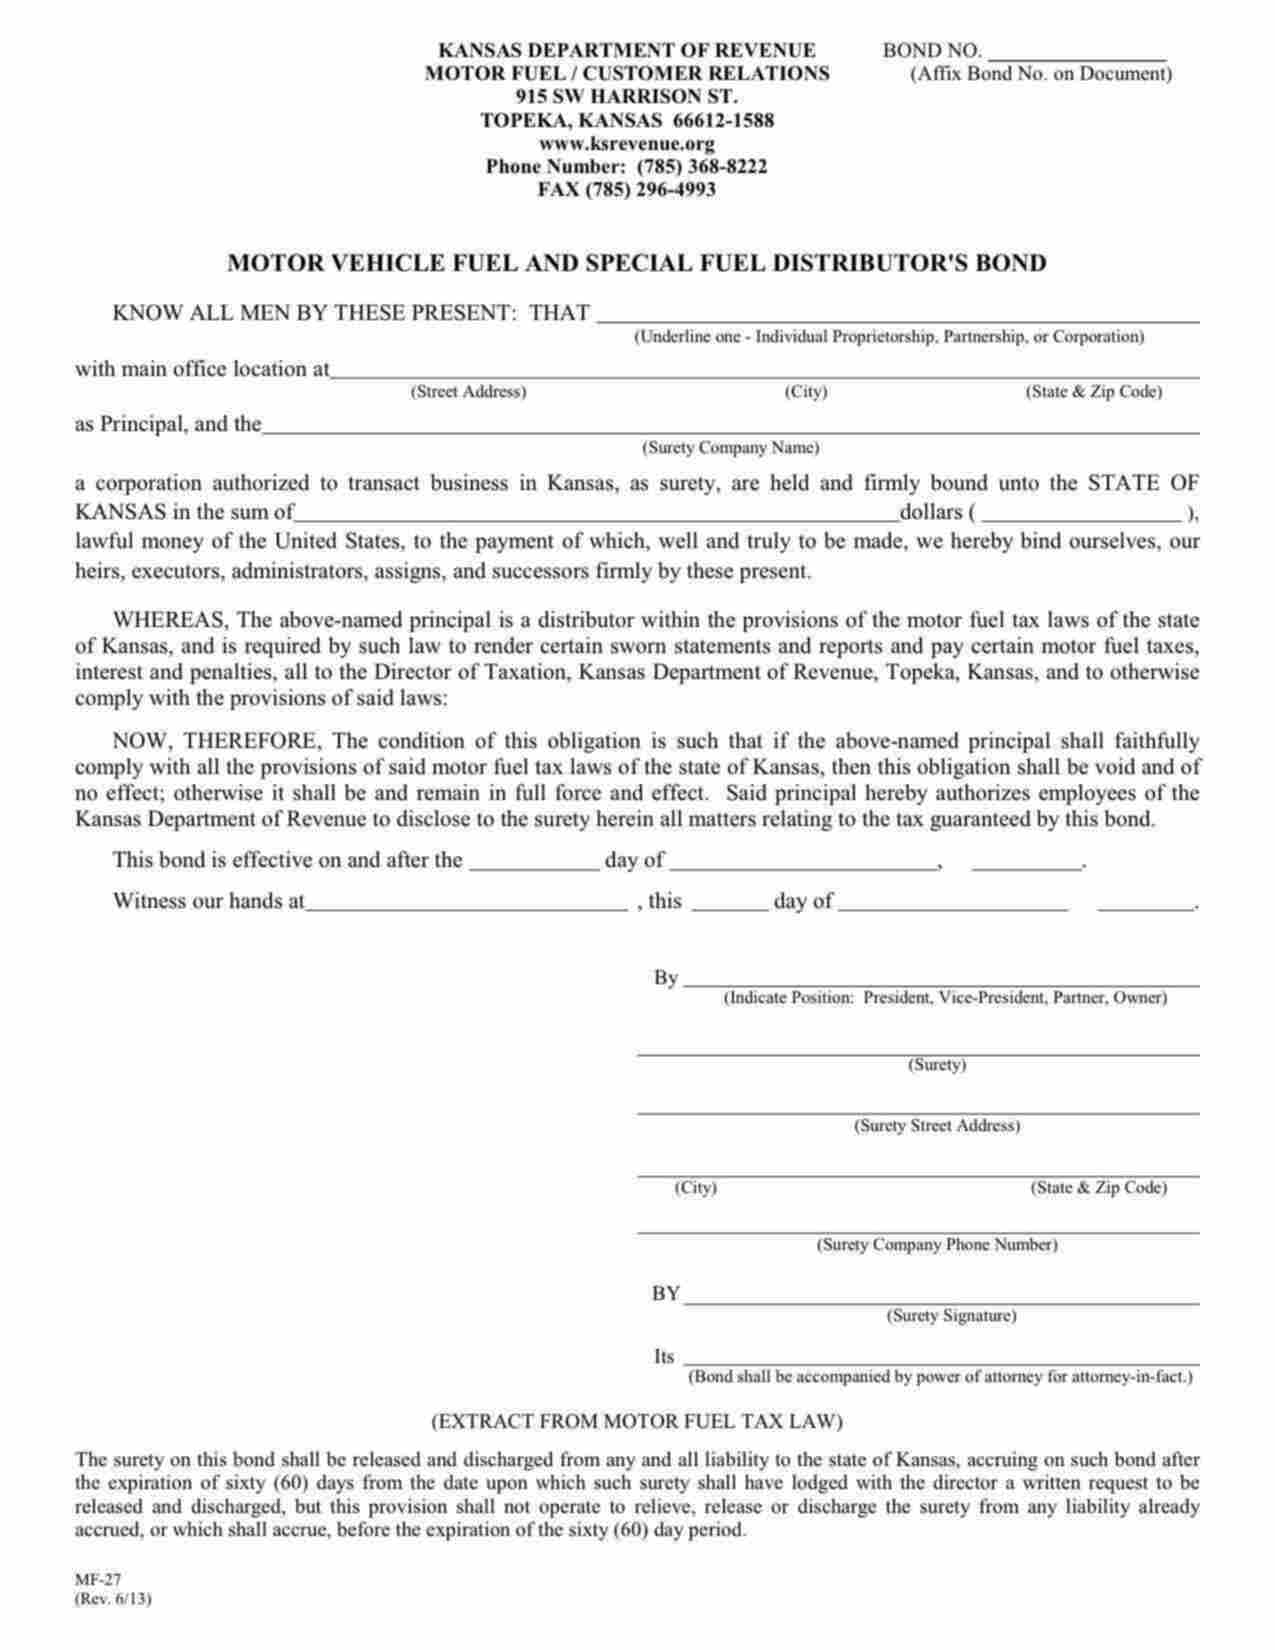 Kansas Motor Vehicle Fuel and Special Fuel Distributor Bond Form